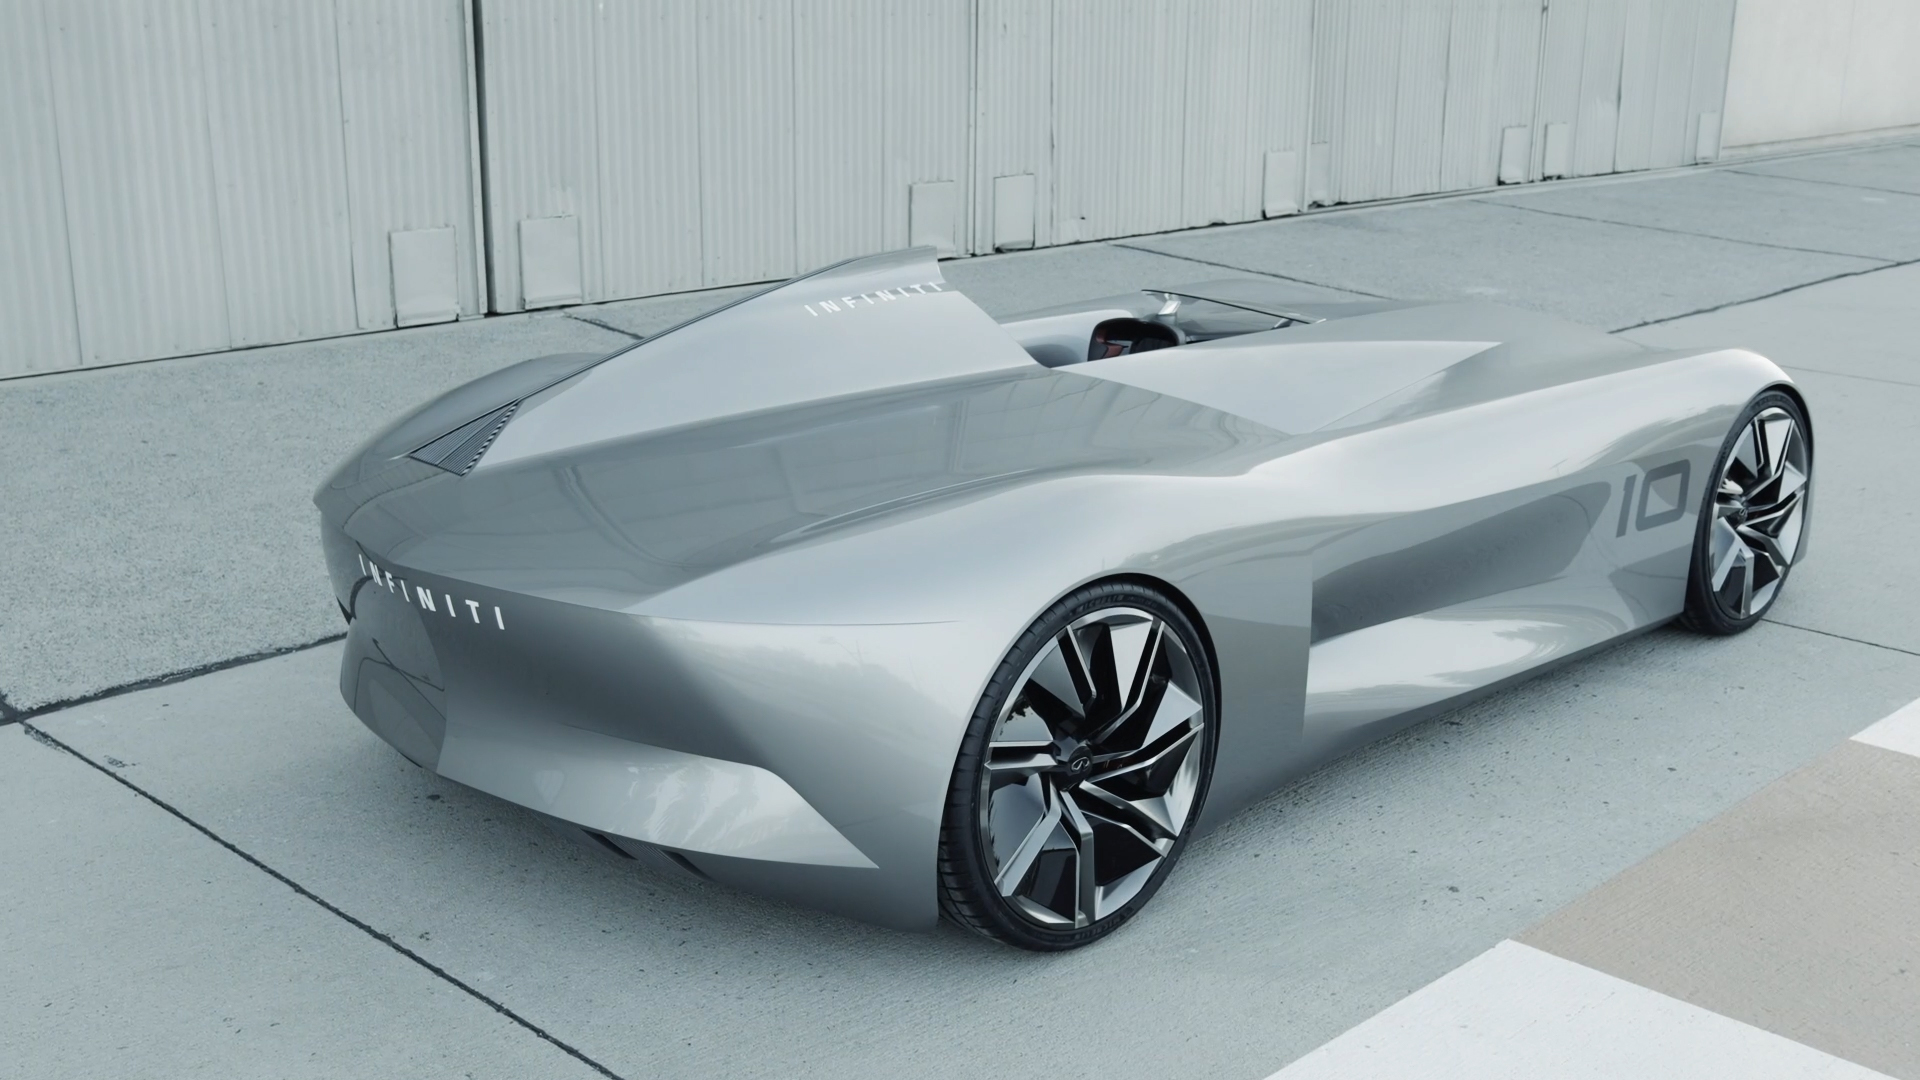 INFINITI Prototype 10 Concept Car Inspires All Future Electrified INFINITI Car Models